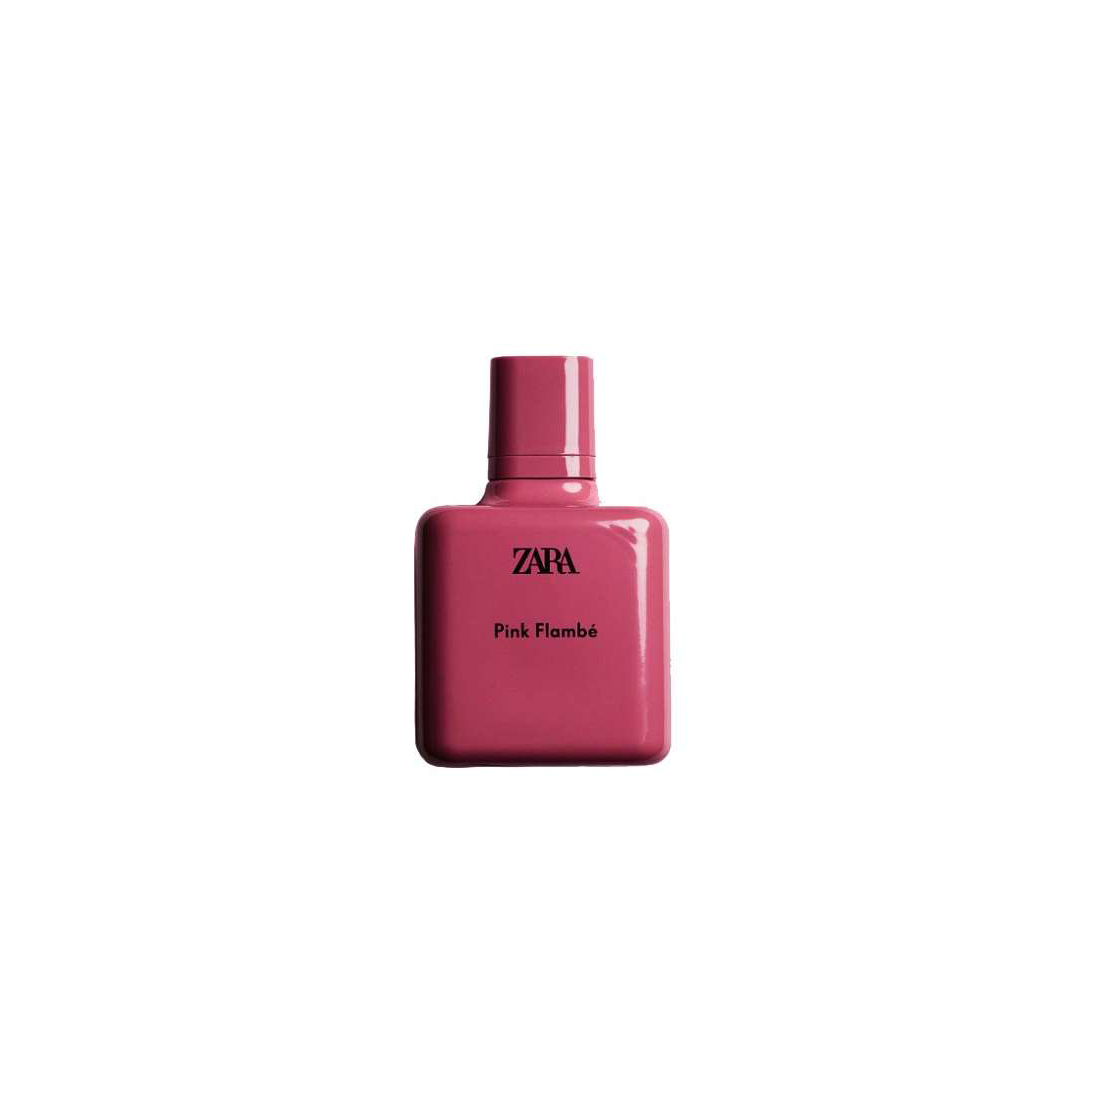 عطر ادکلن زارا پینک فلامبی | Zara Pink Flambe (کالای سفارشی ـ ارسال بین 7 تا 12 روزکاری)